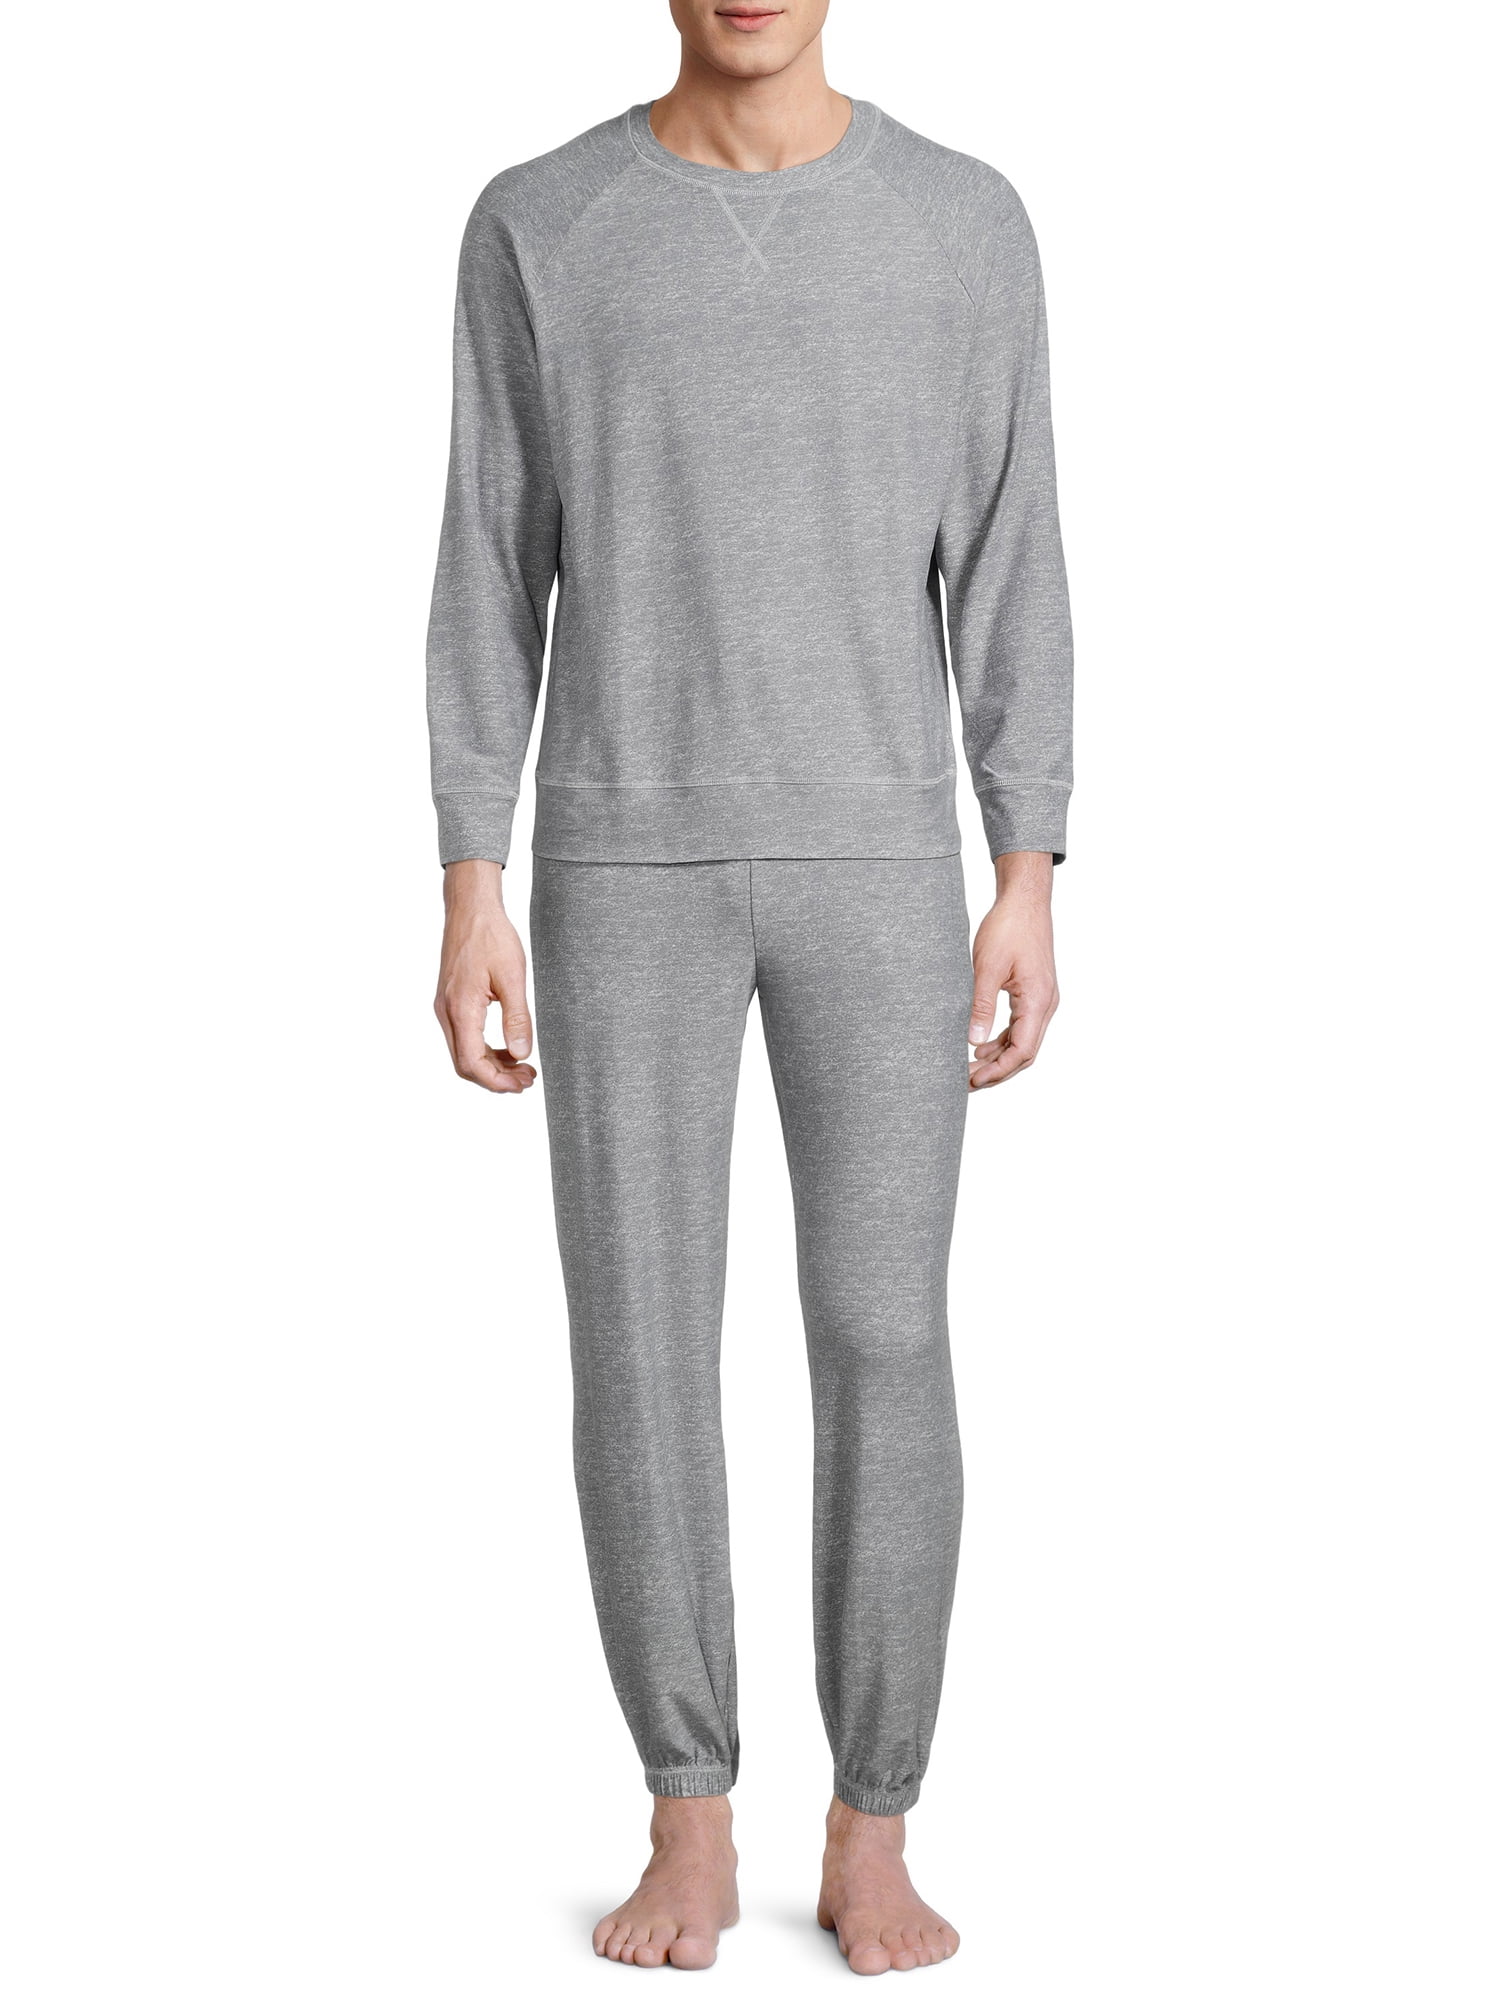 NEW Mens Jogger Pants Size 2XL Pajamas Lounge Sleepwear Cuffed PJs Sleep Black 